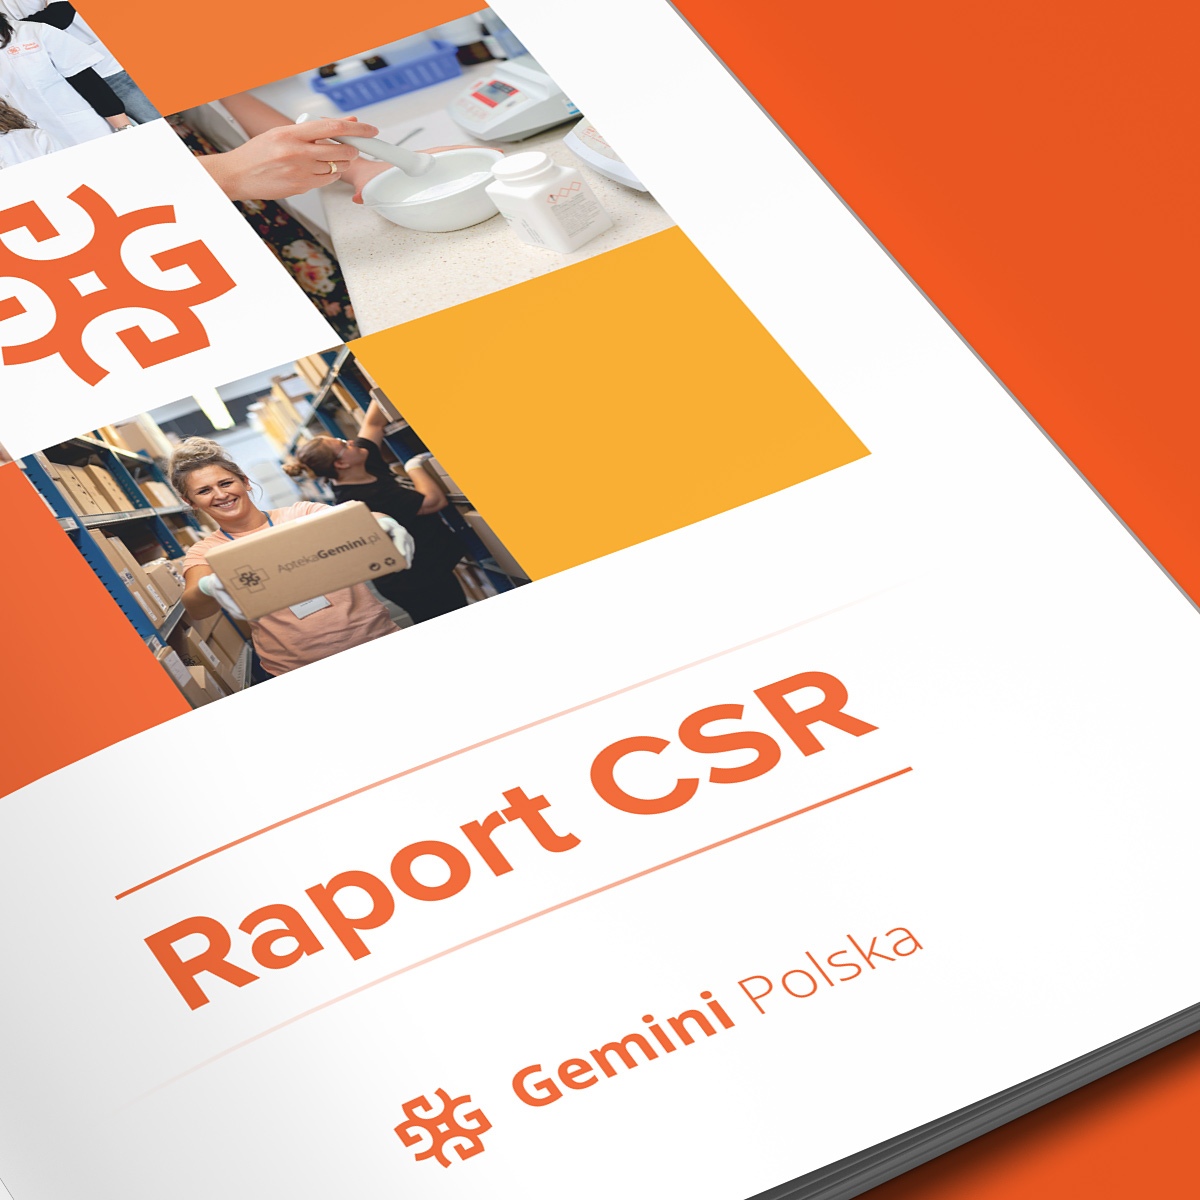 Projekt raportu CSR dla Gemini Polska